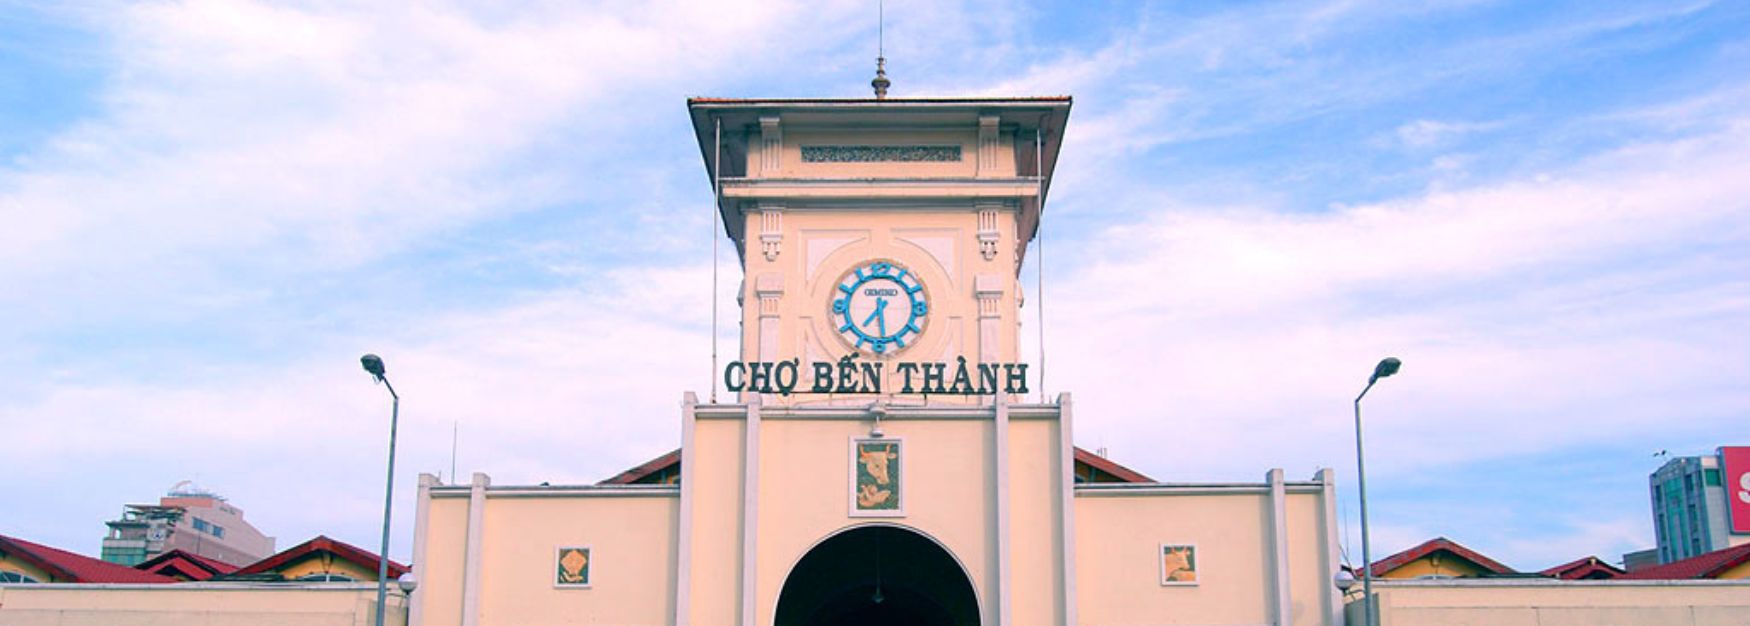 Ben Thanh market 